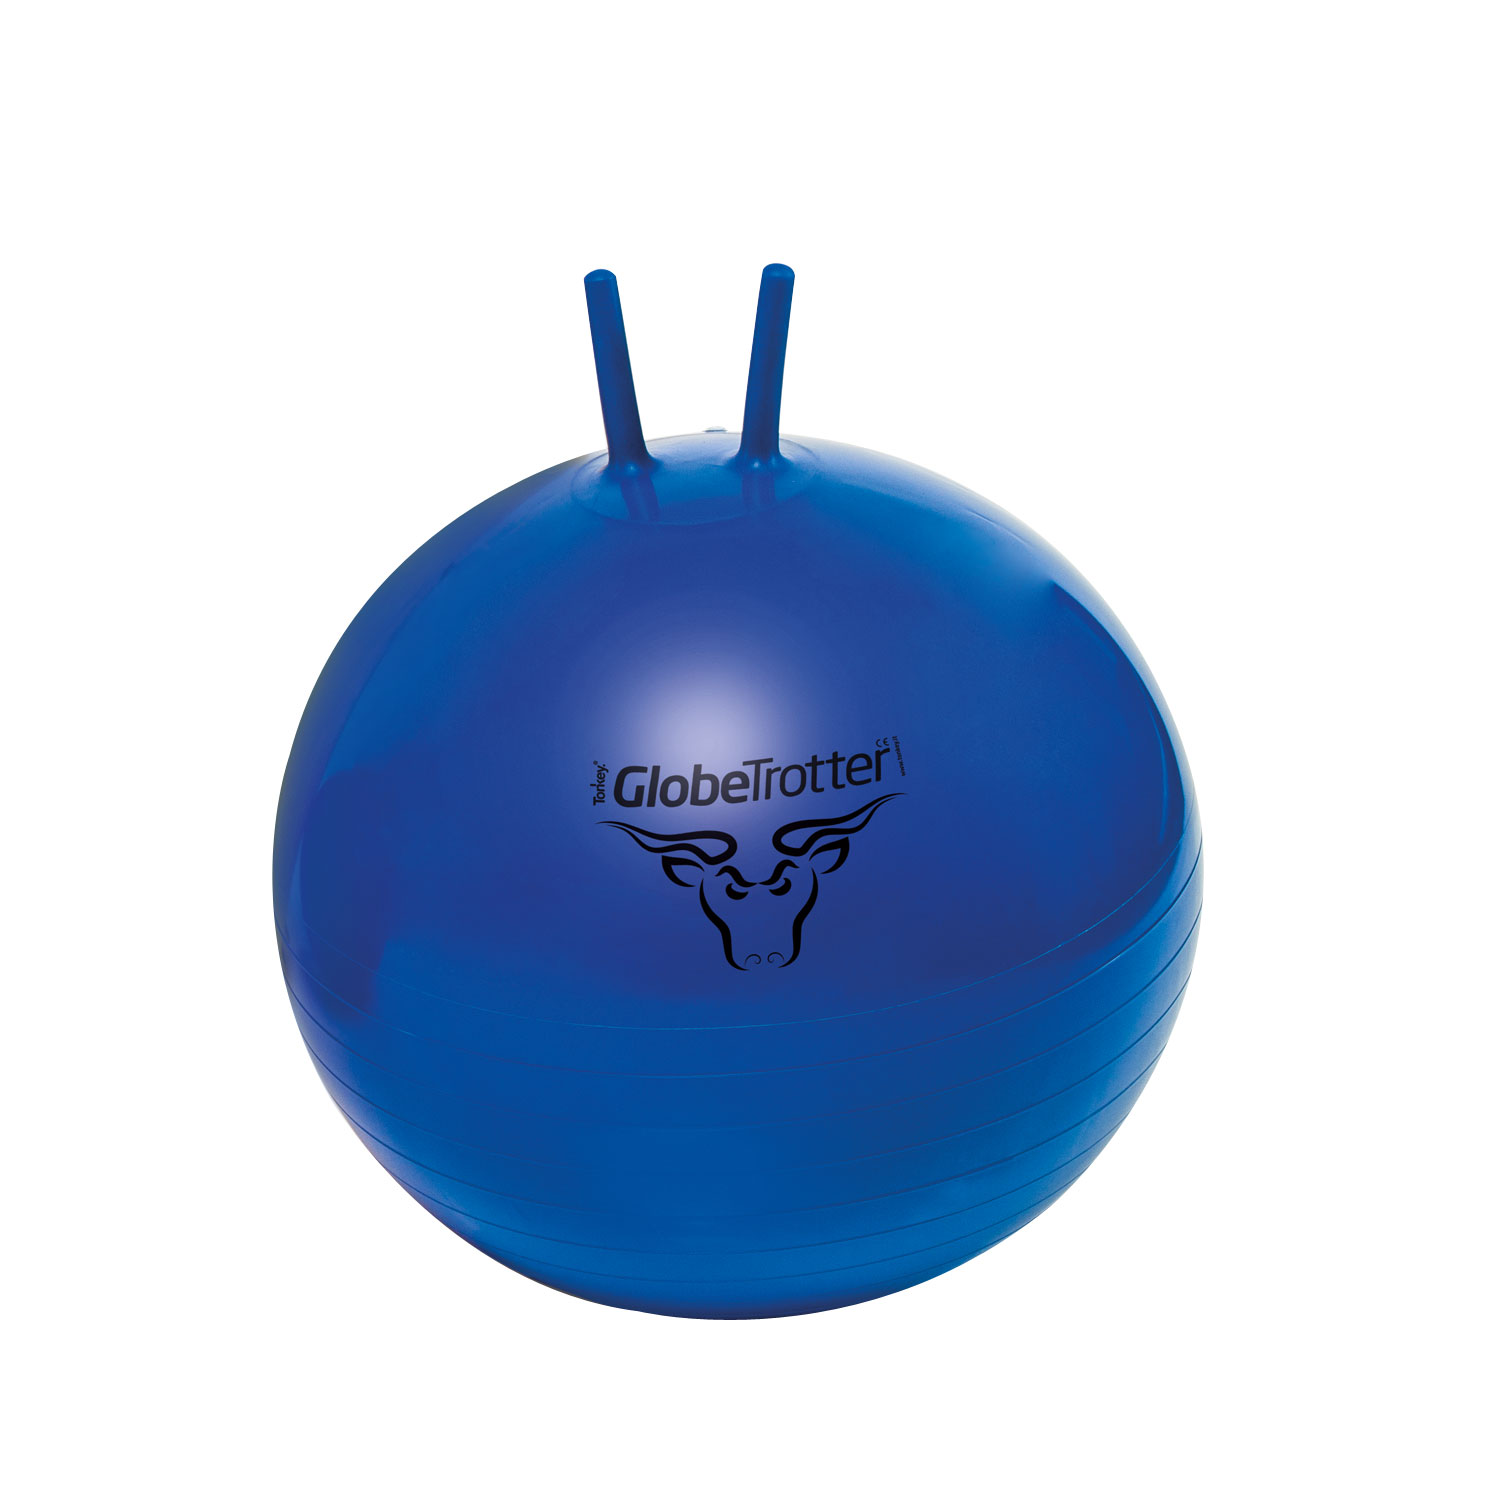 Original Pezzi® Globetrotter Hüpfball